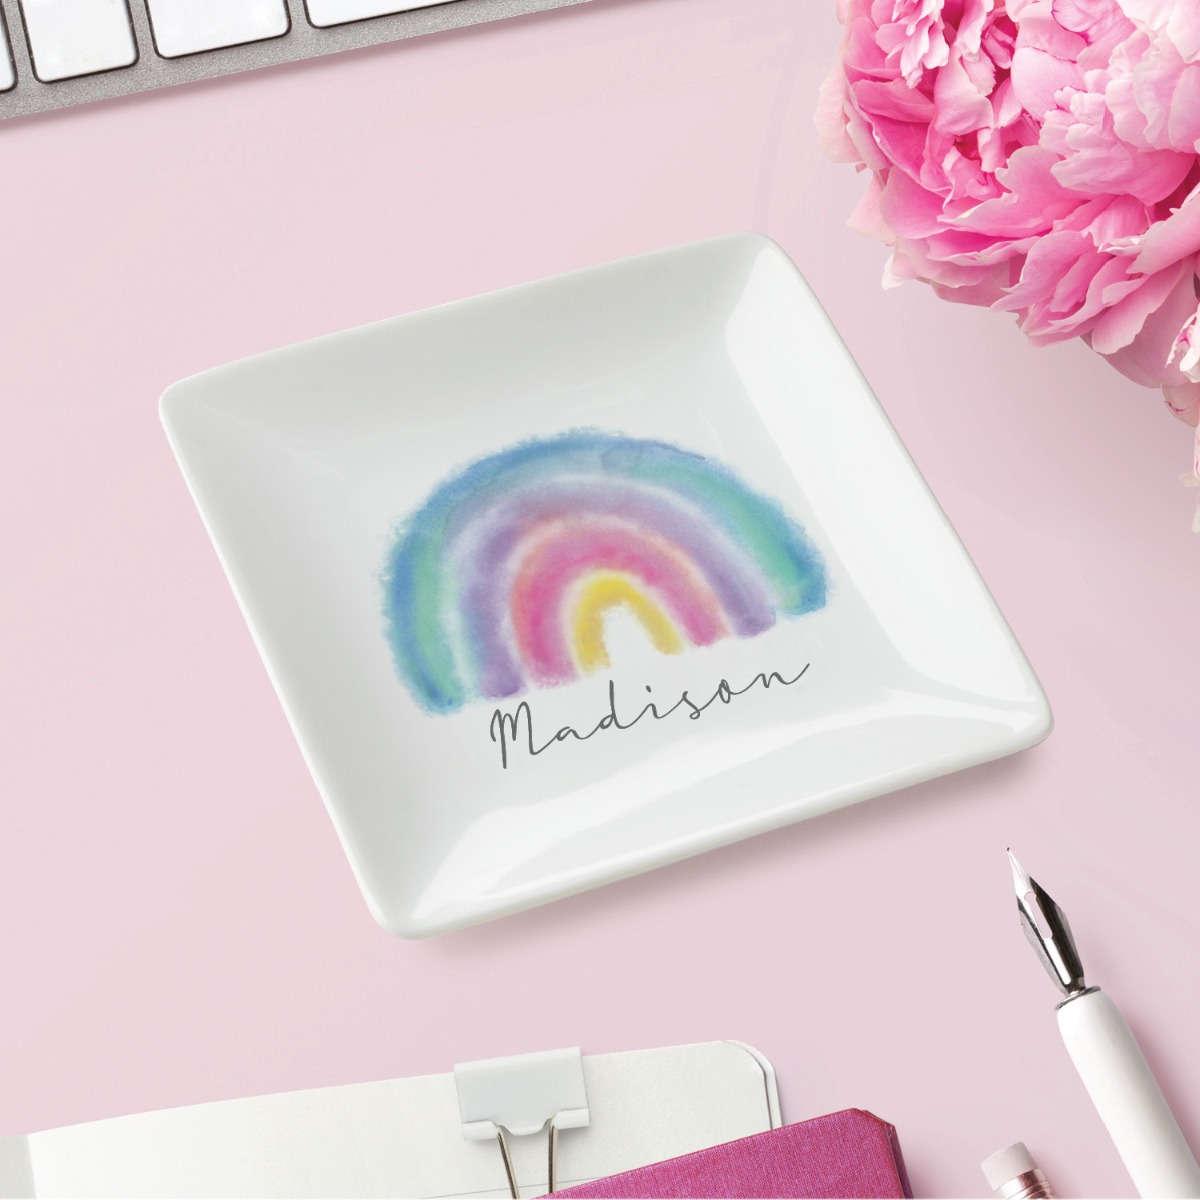 Pastel Rainbow Personalized Square Trinket Dish